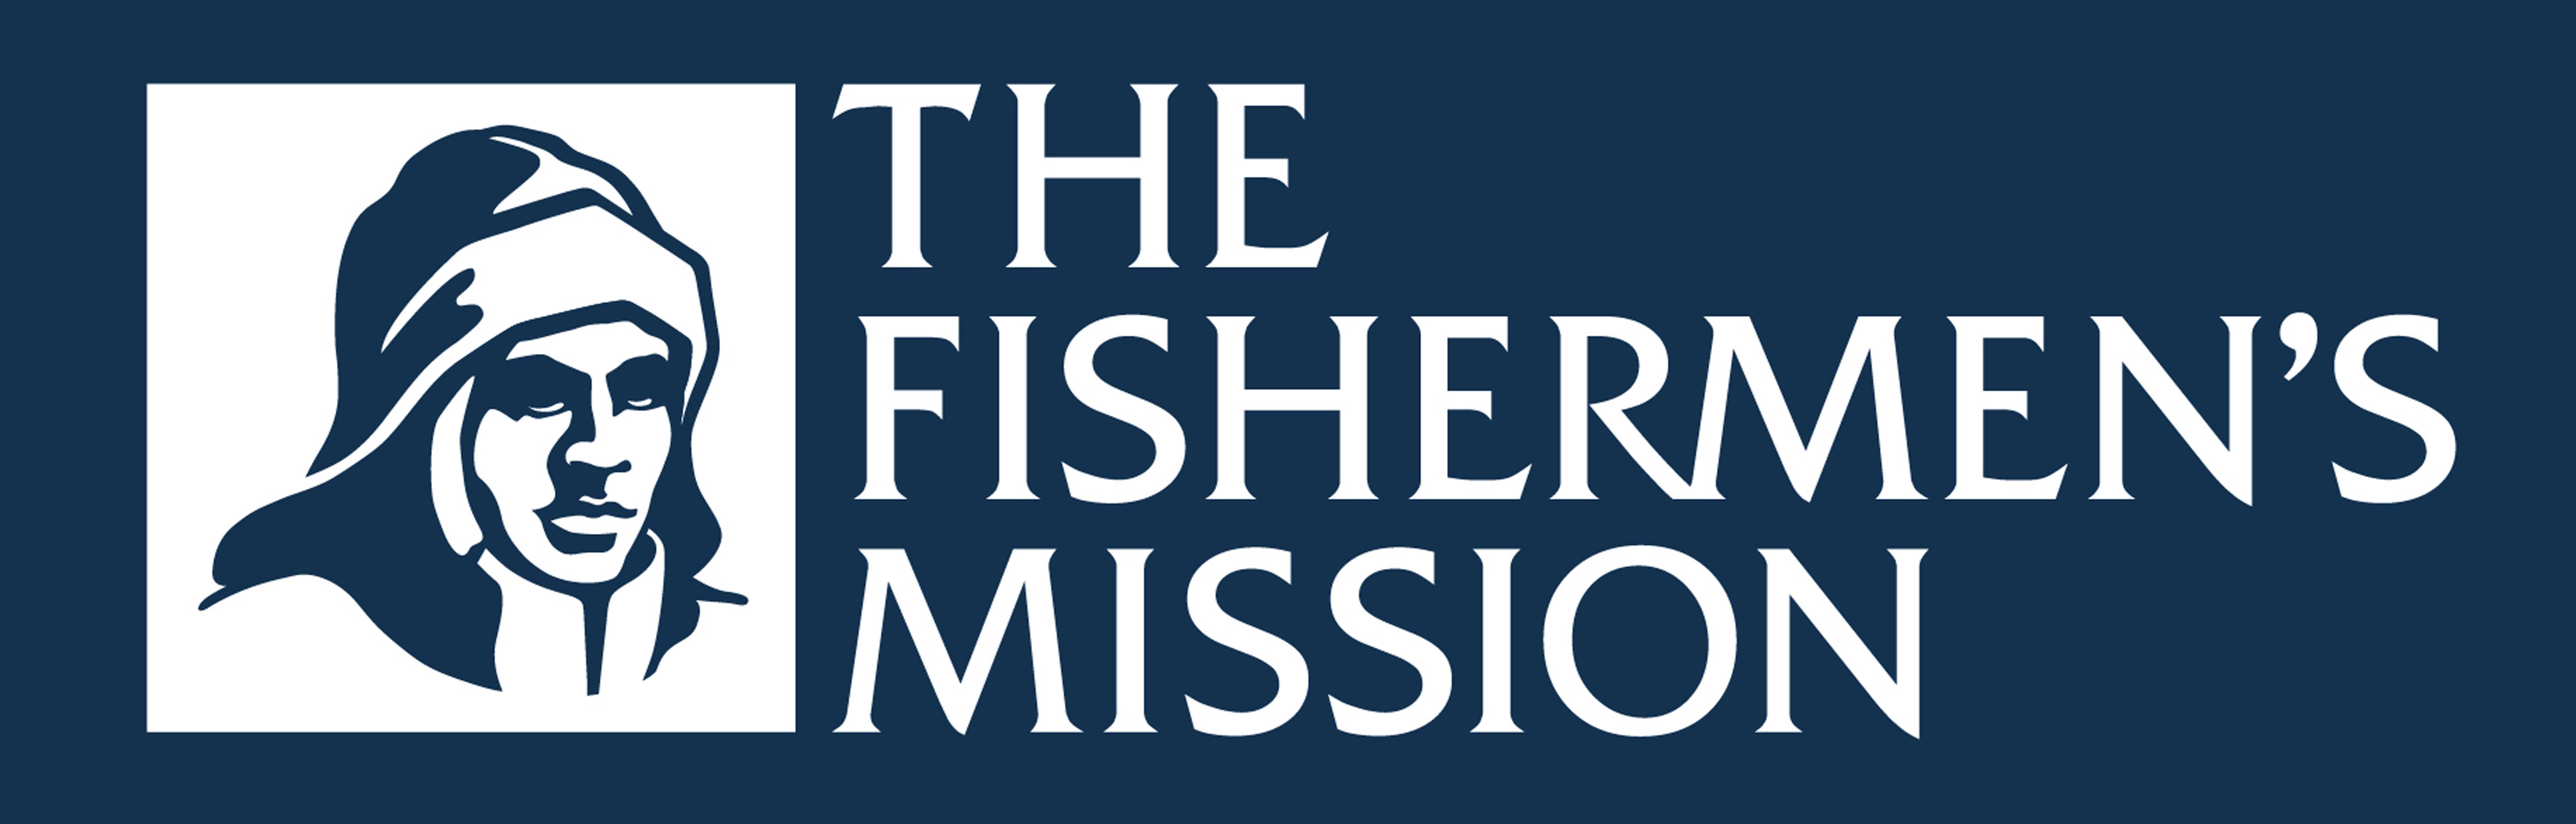 The Fishermens Mission Logo